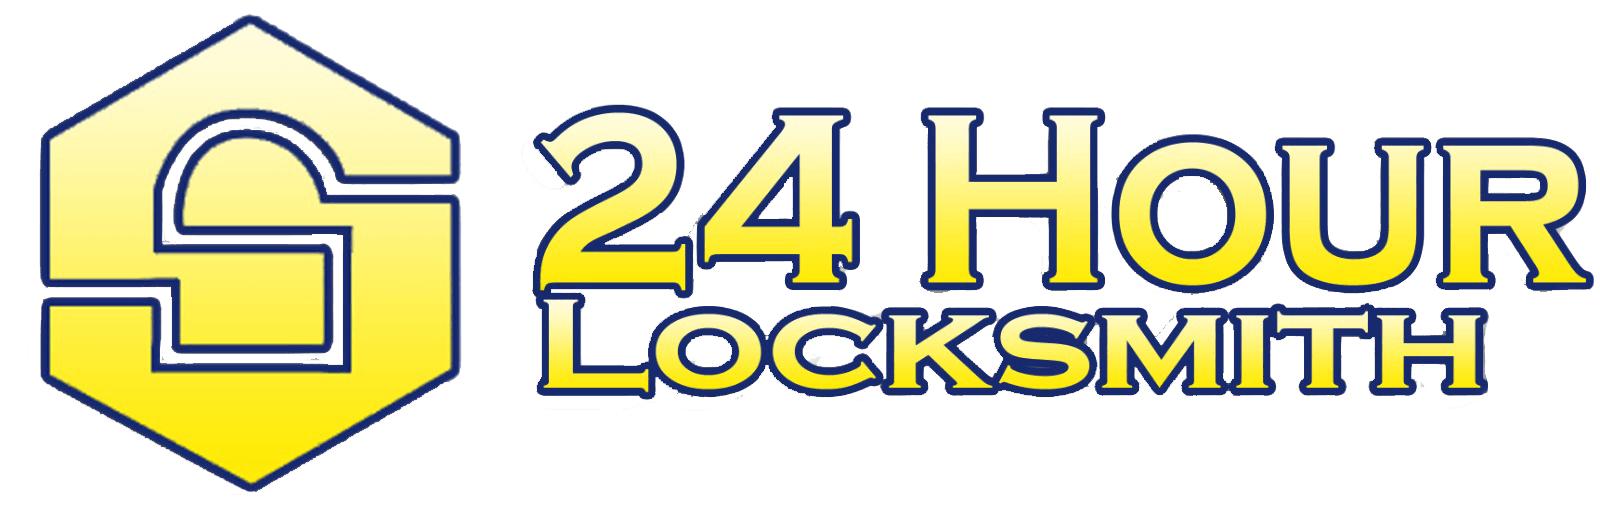 24 Hour Locksmith in Fort Wayne, IN